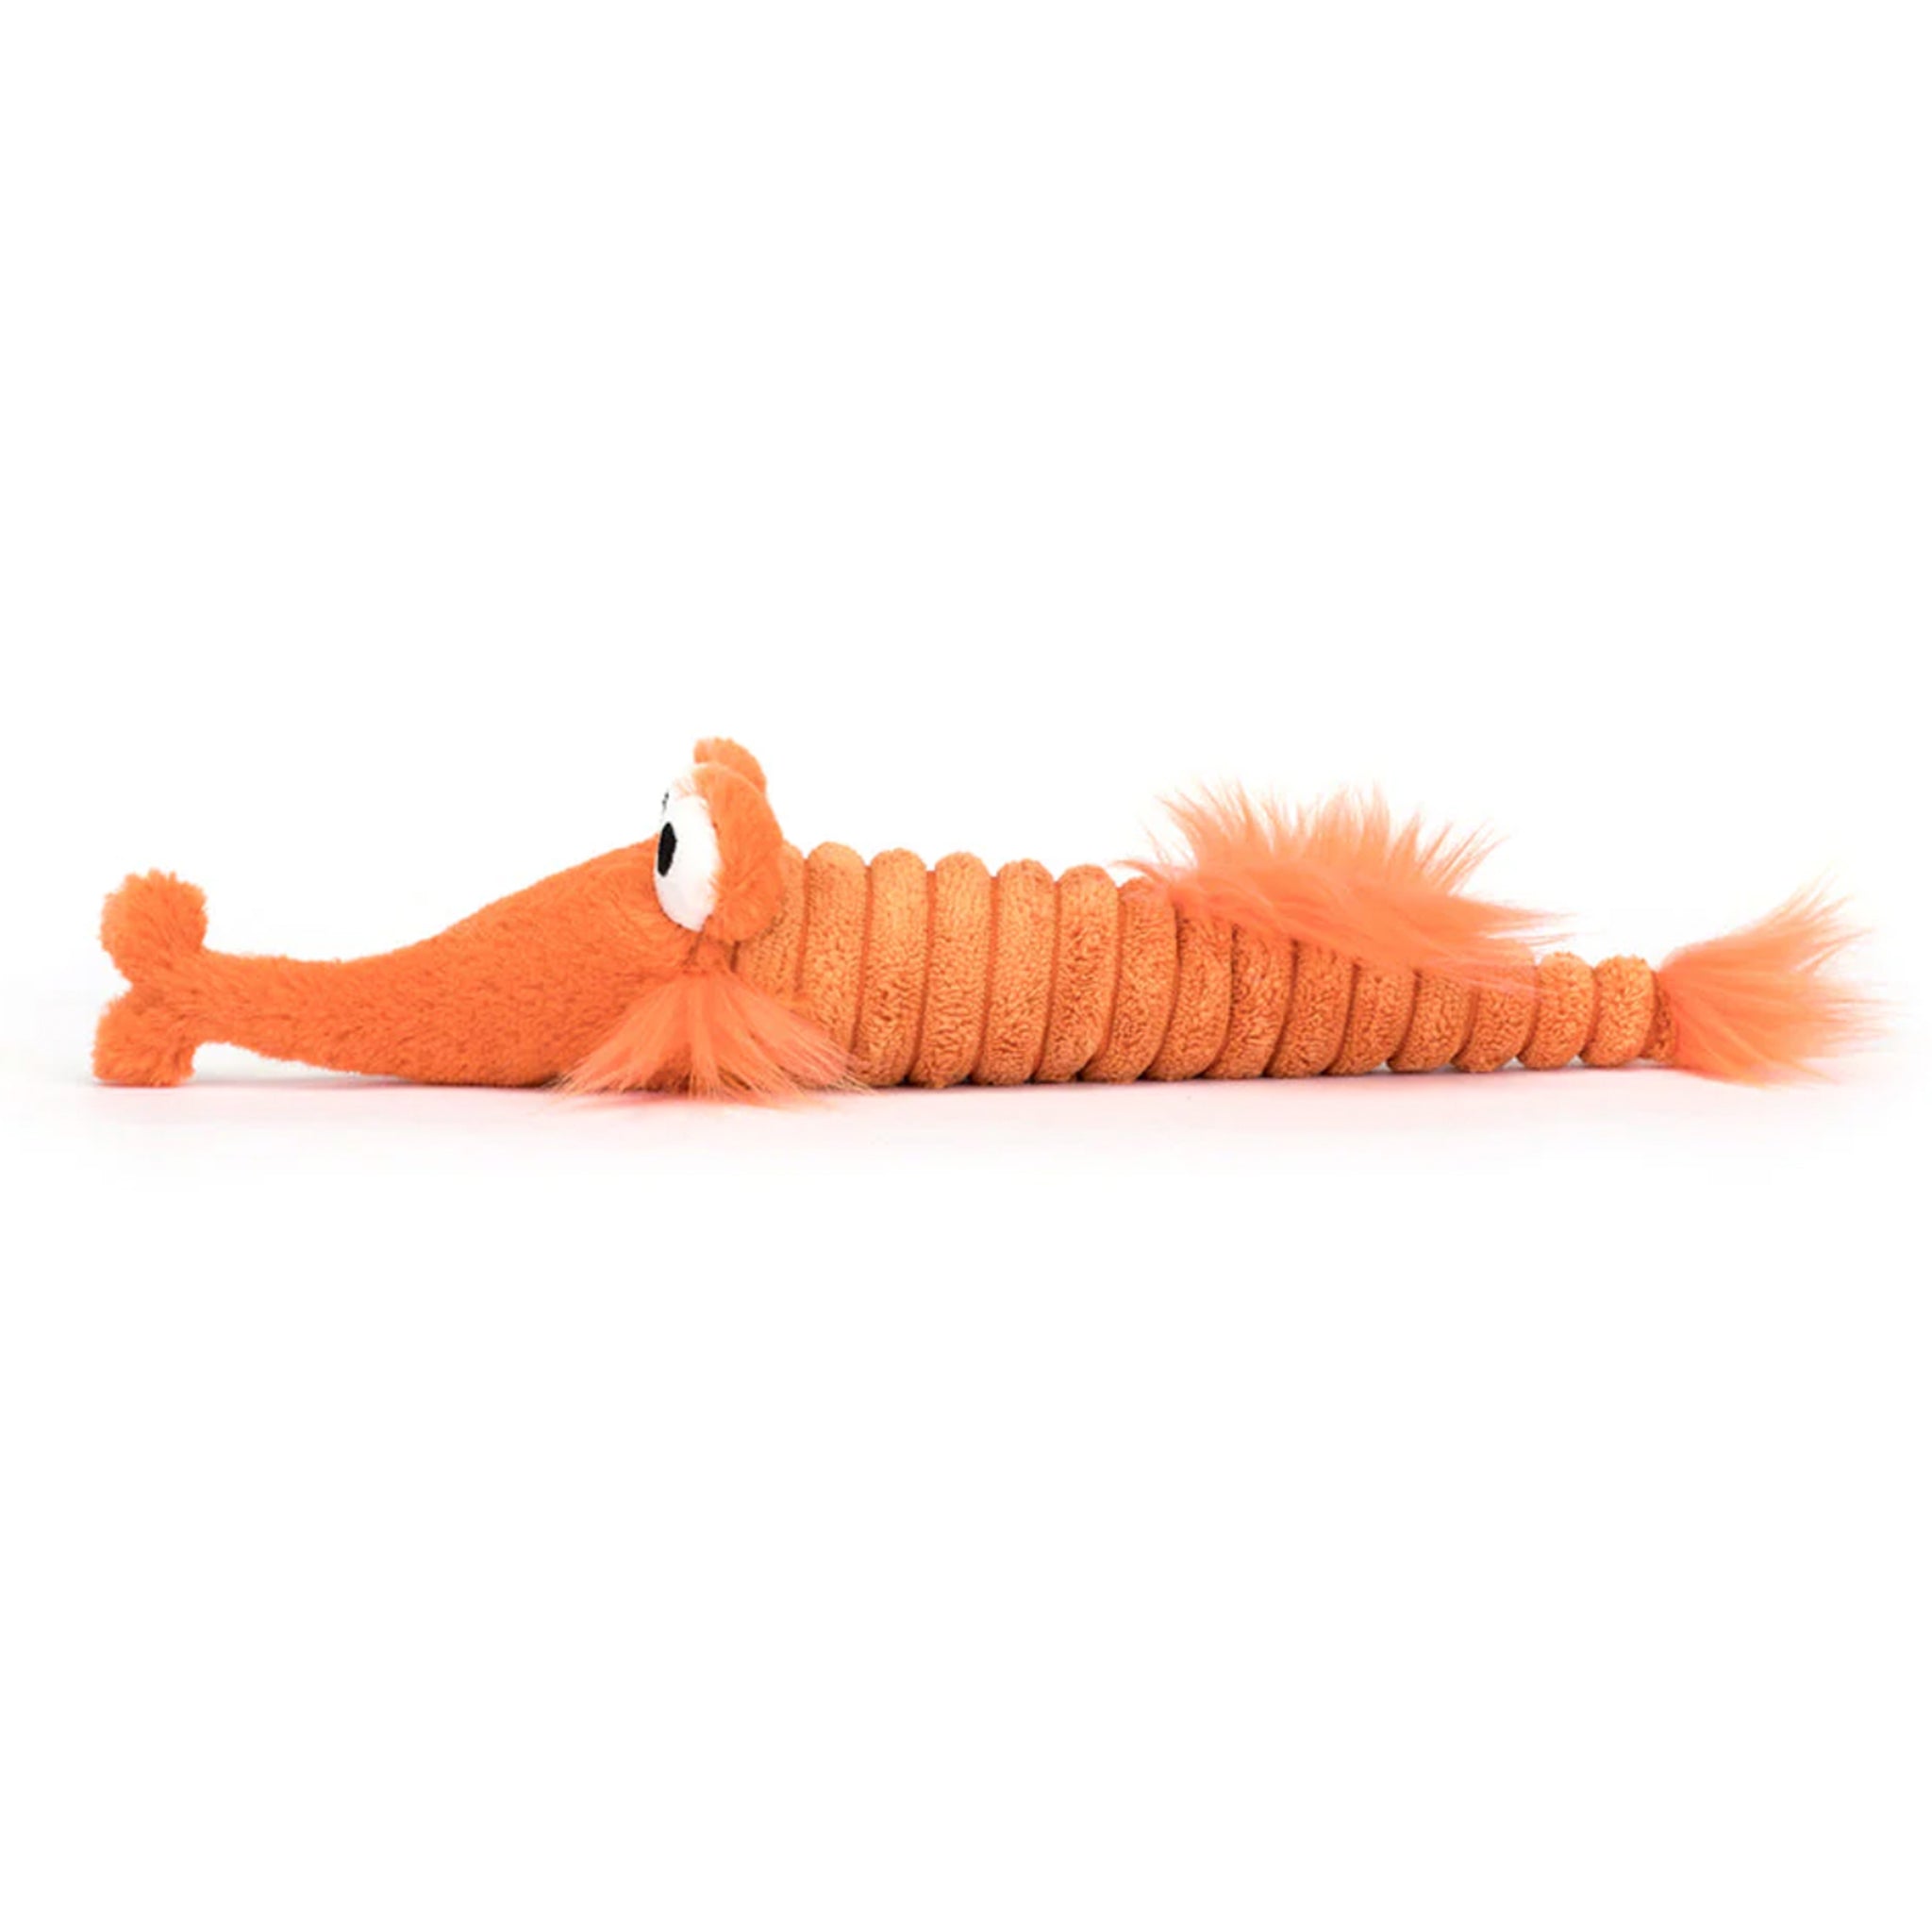 A bright orange razor fish shaped stuffed toy.